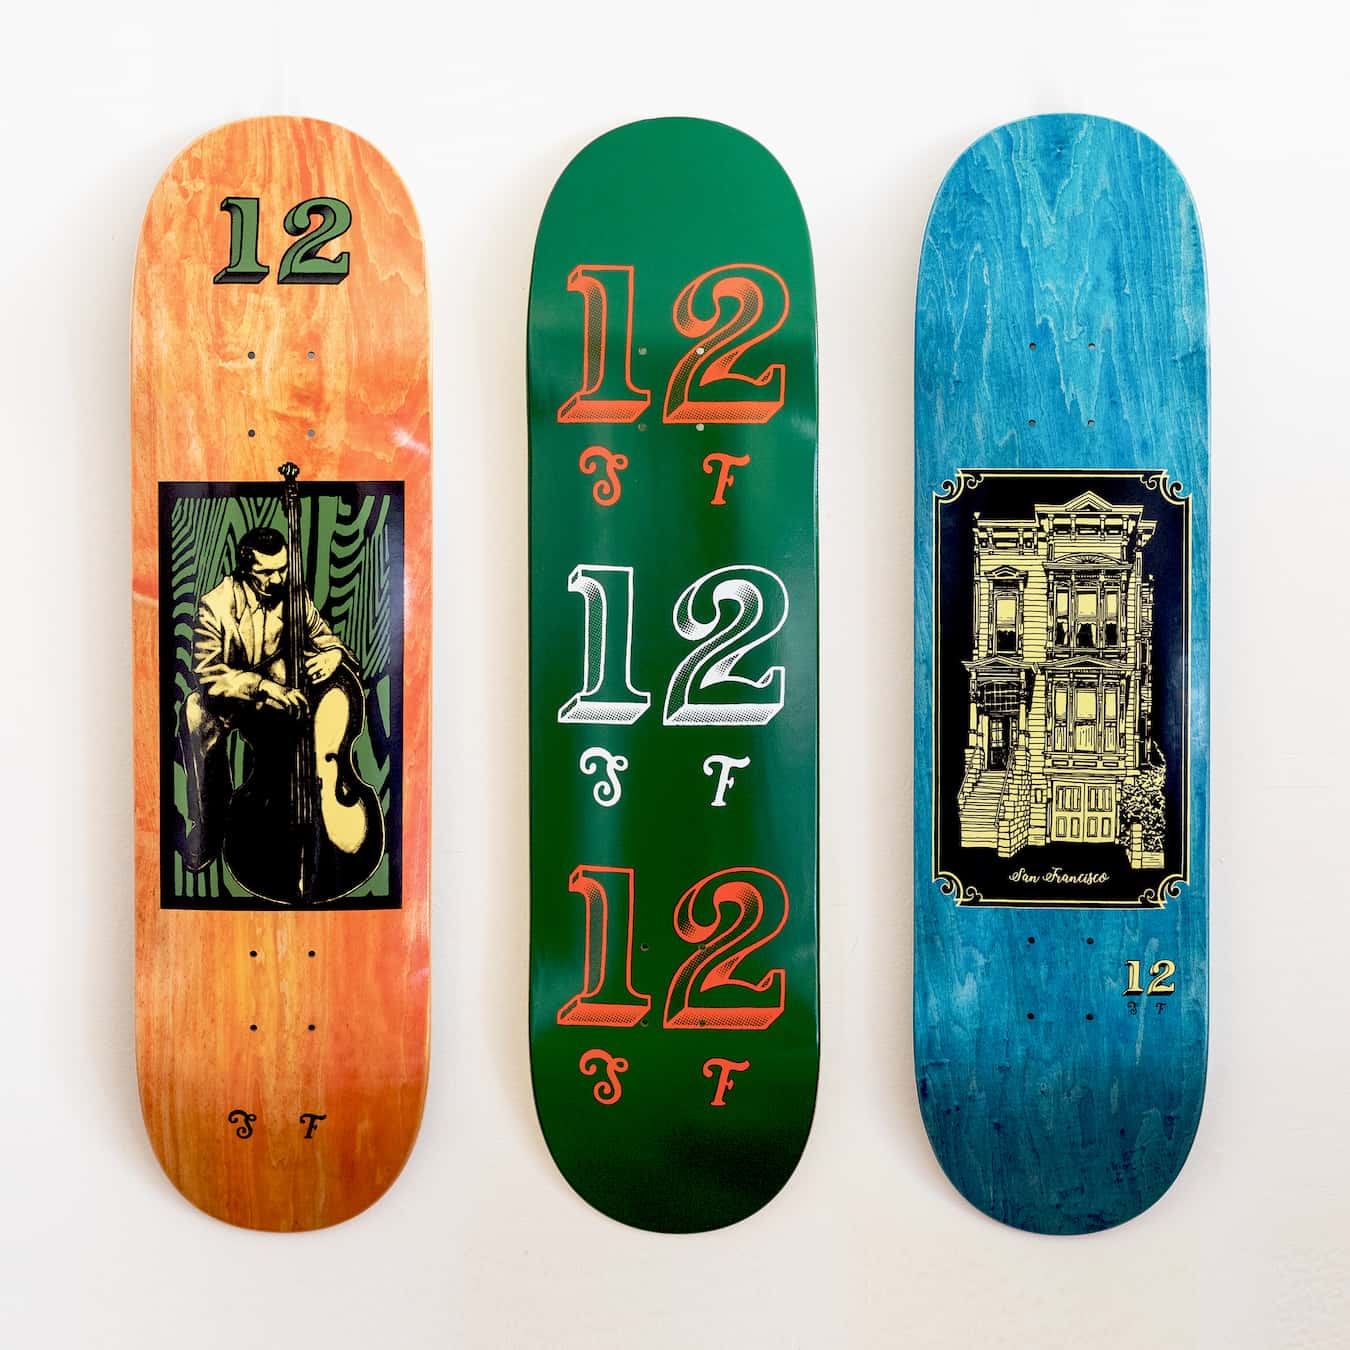 jazz and san francisco themed skateboard graphics and design. Three skateboard decks by chris morgan creative